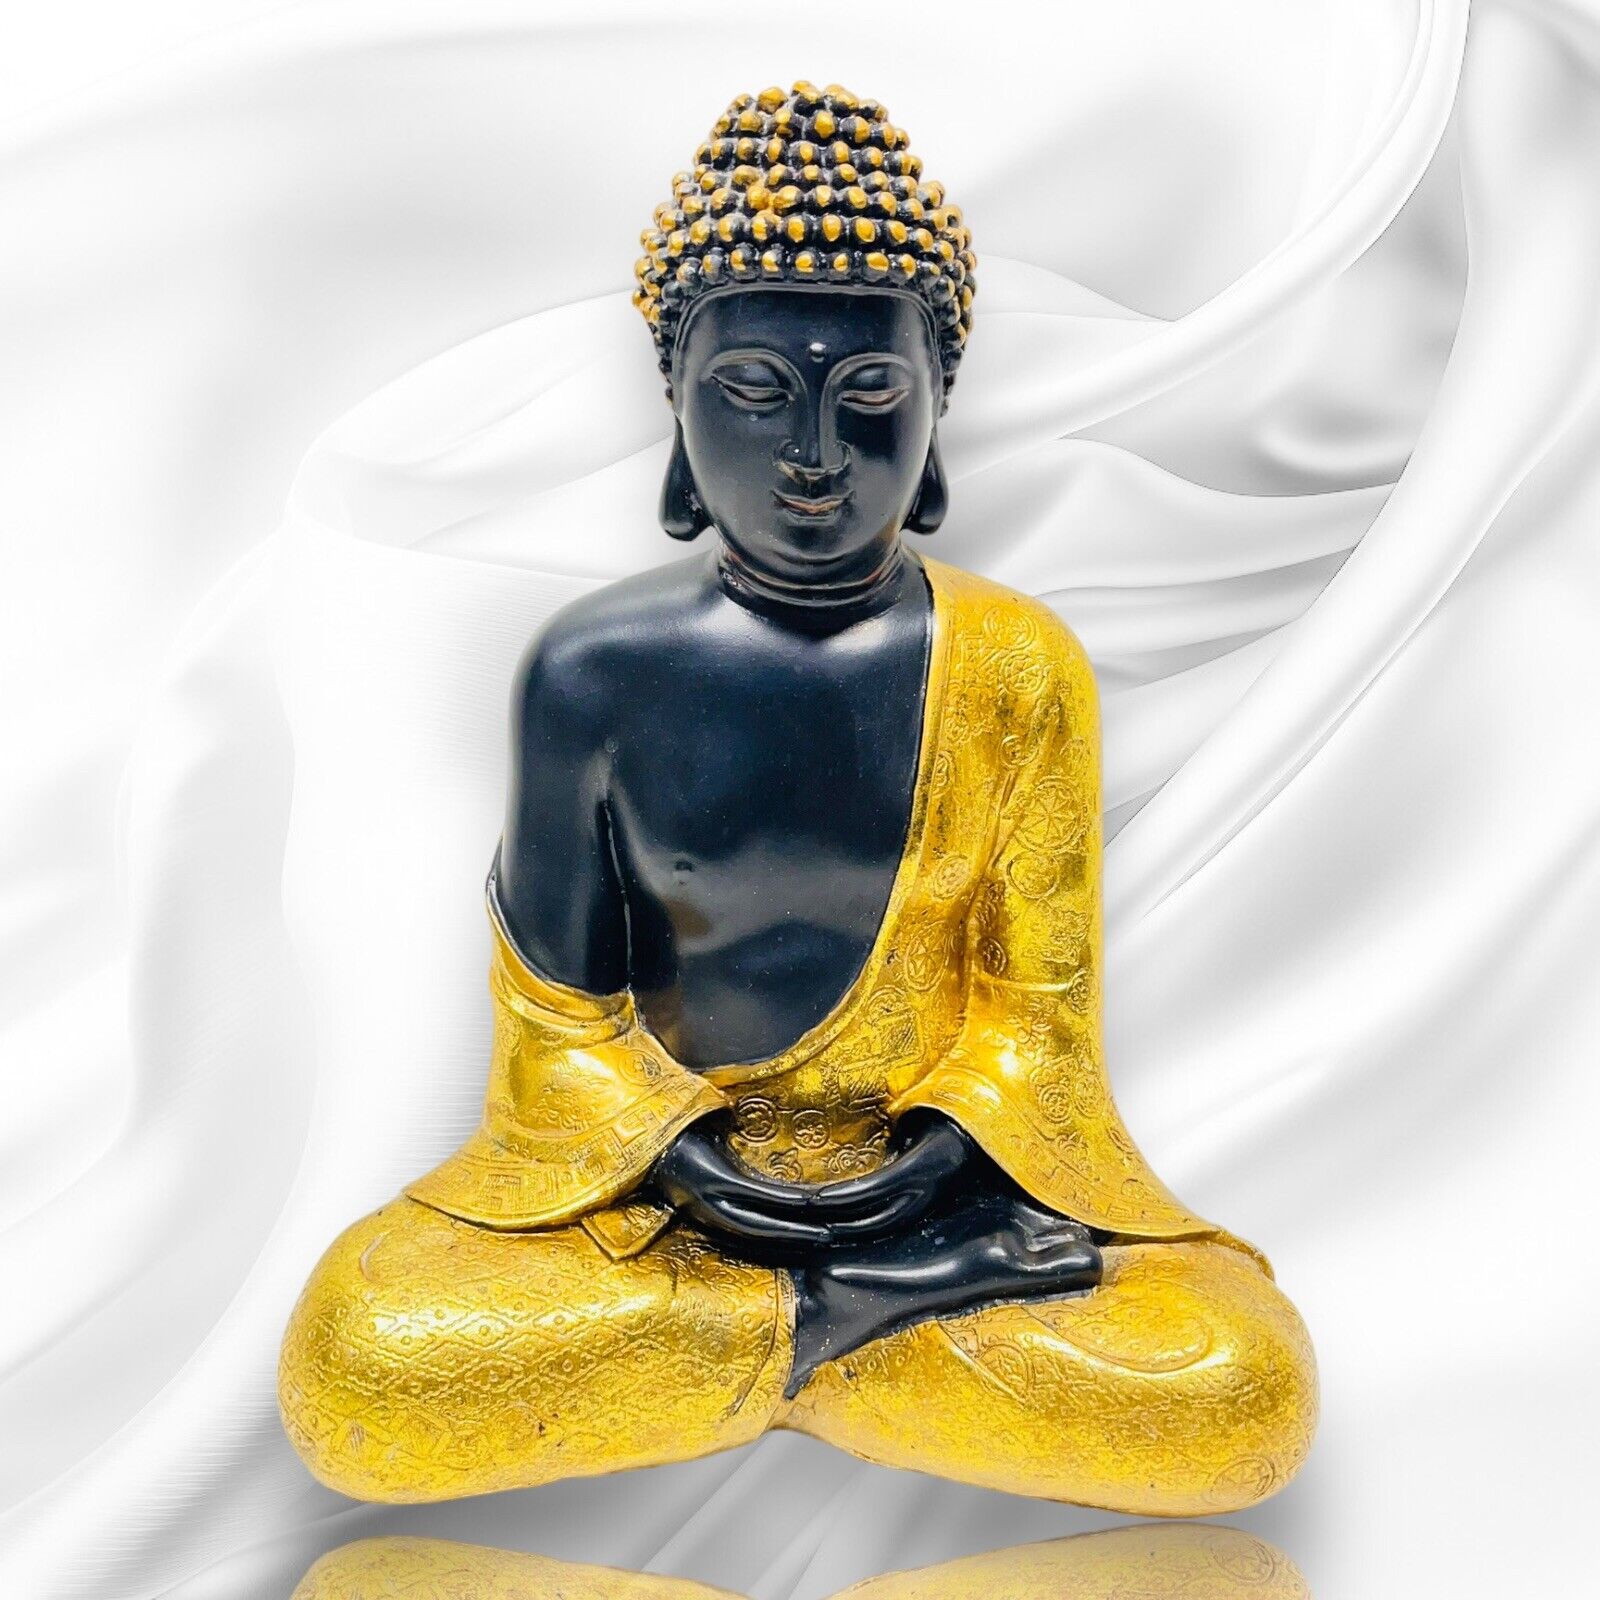 Medium 10” SITTING BUDDHA MEDITATING PEACE STATUE